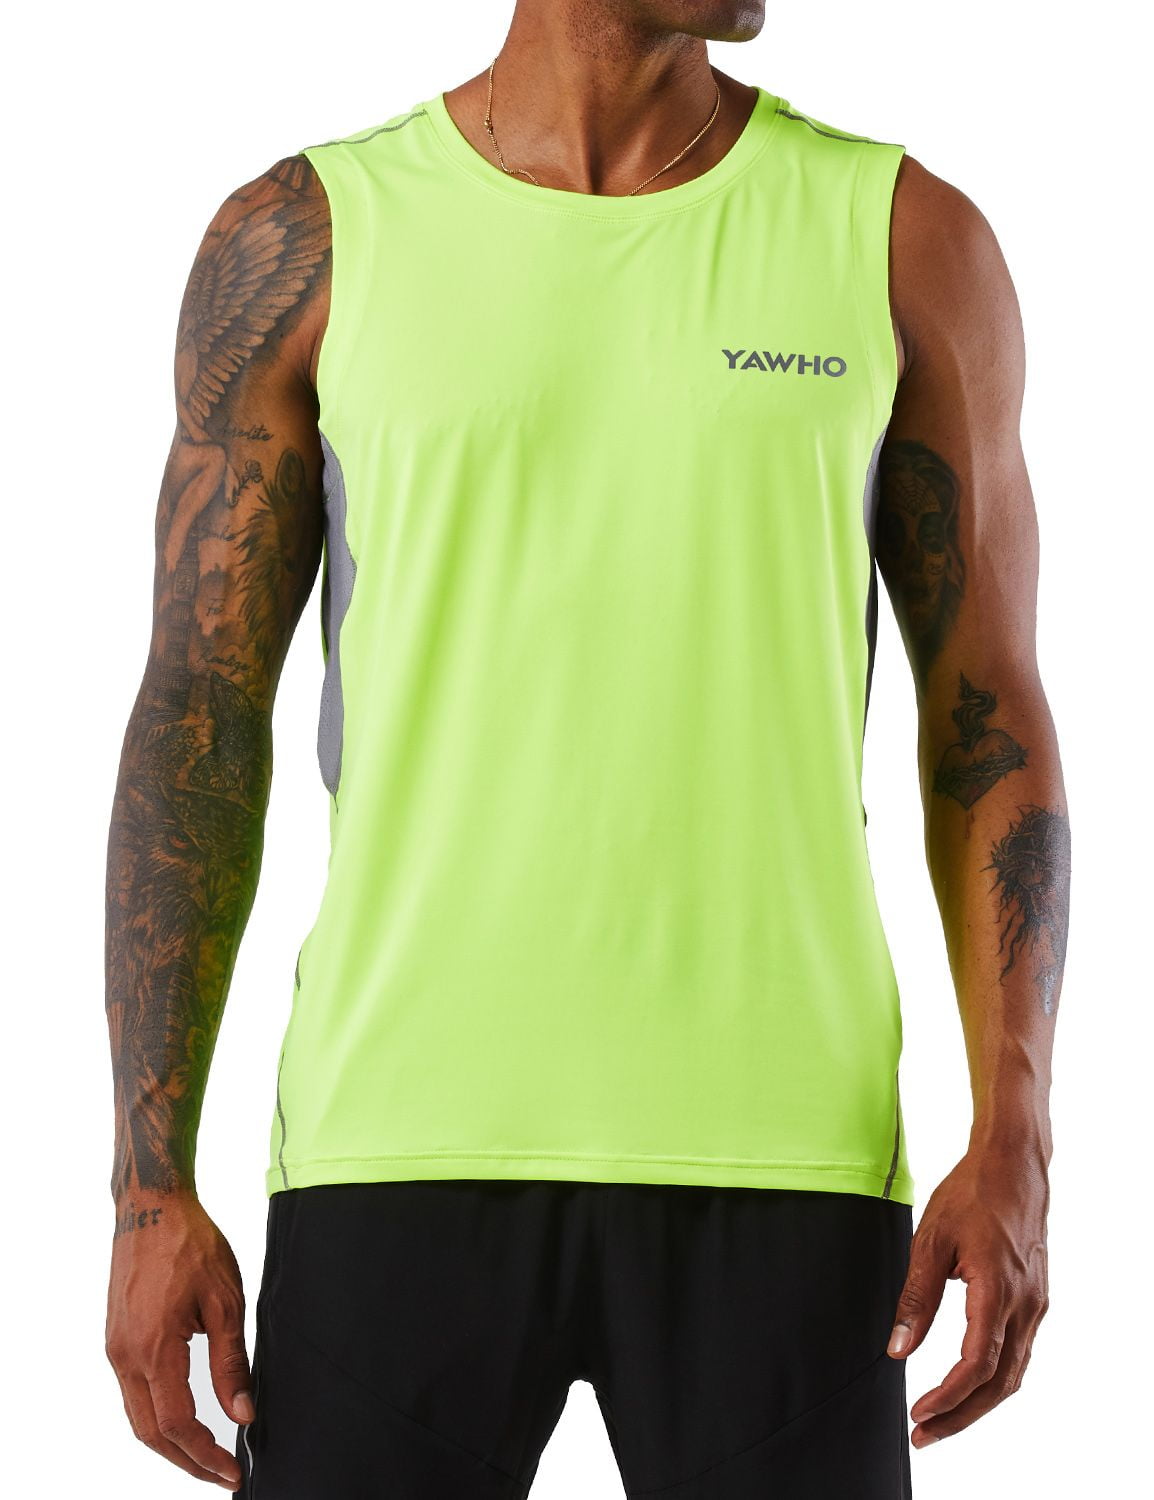 Men's Tank Tops Quick Dry Workout Swim Beach Shirts Sleeveless Shirts ...